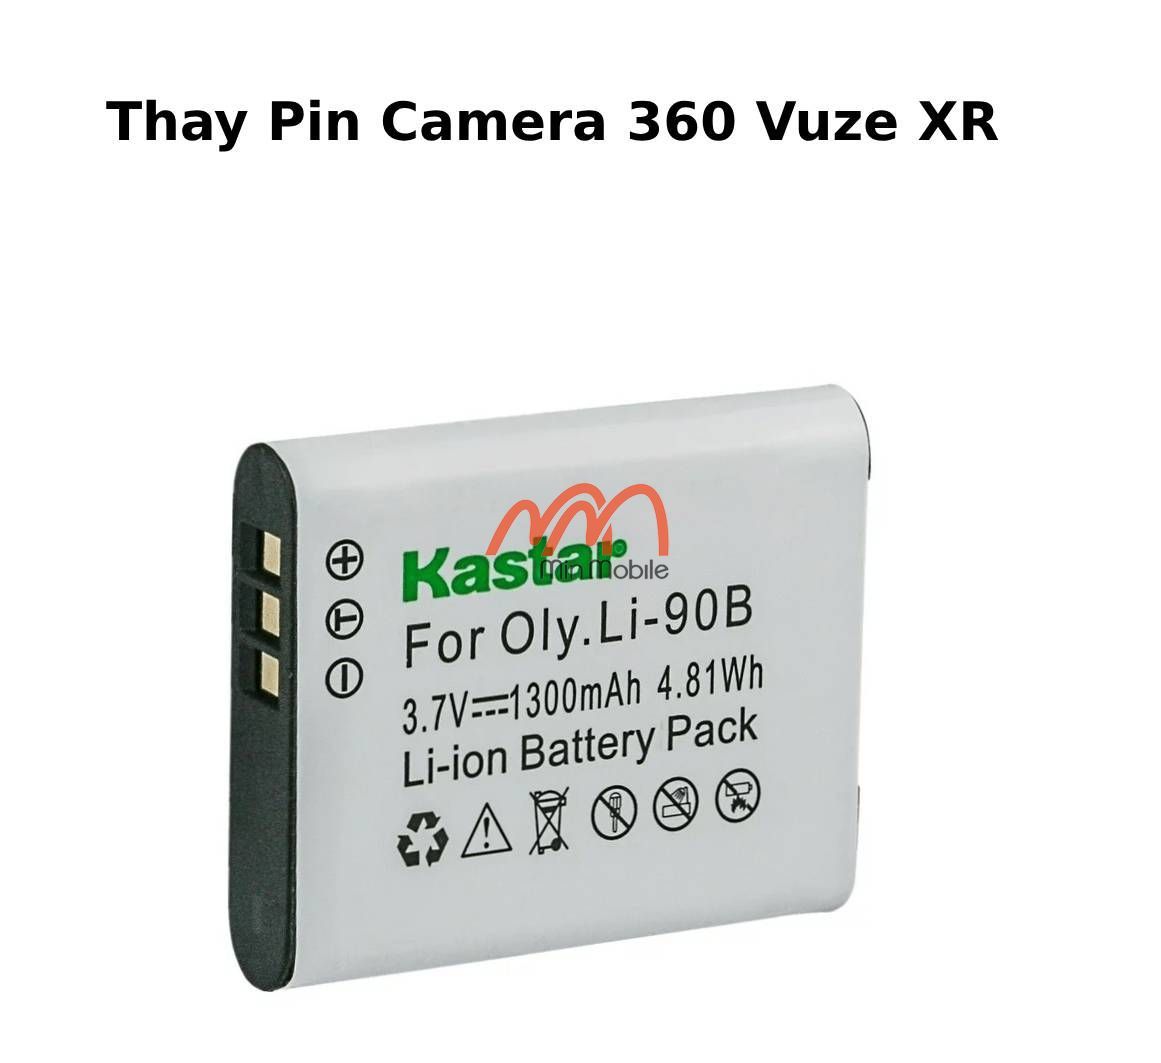 Thay Pin Camera 360 Vuze XR